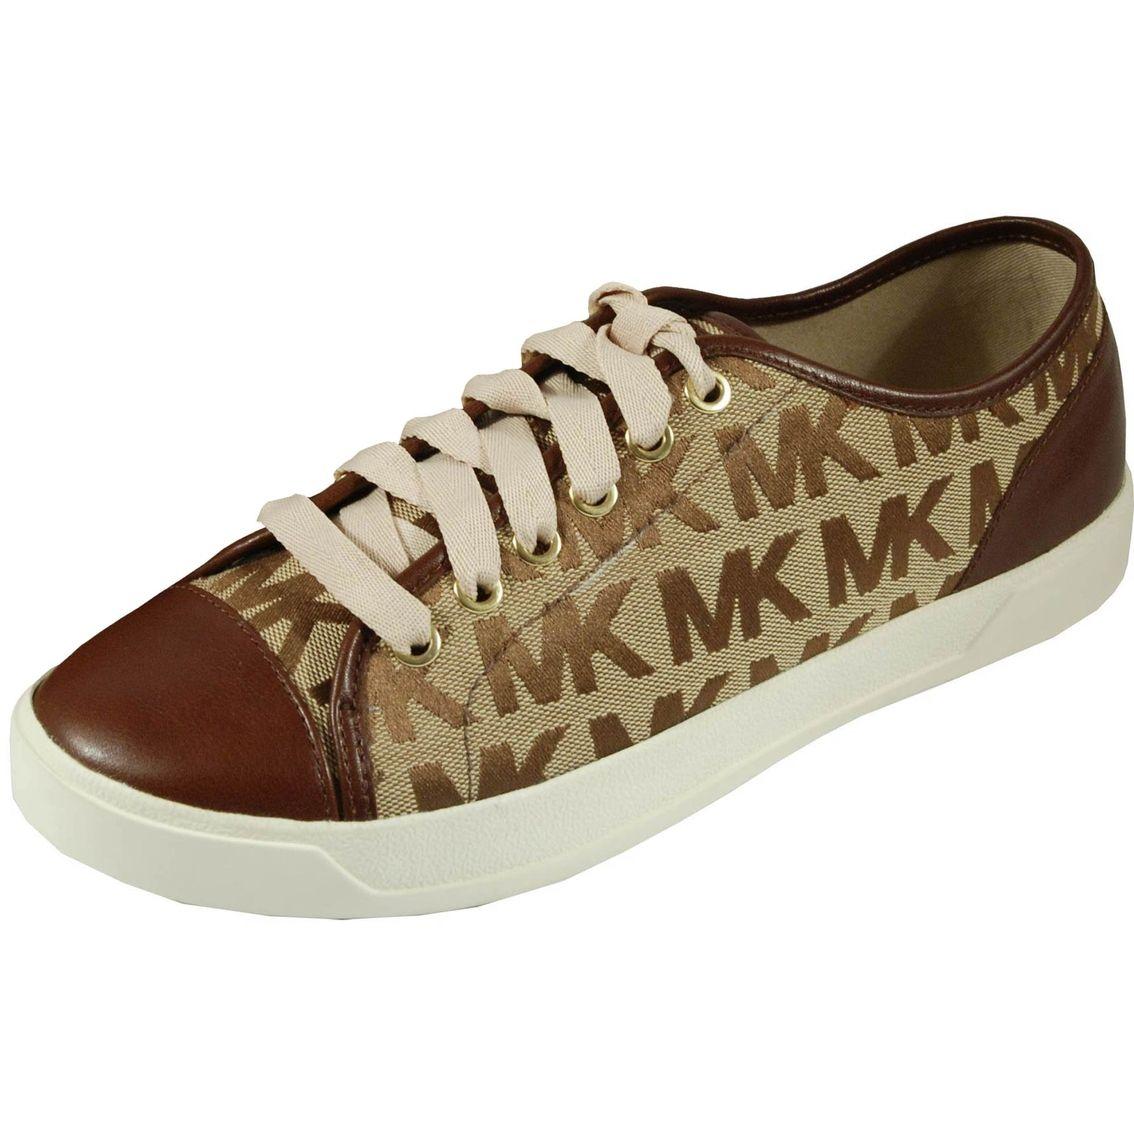 Michael Kors Shoe Logo - Michael Kors Women's Mk City Sneakers. Shoes. Shop The Exchange